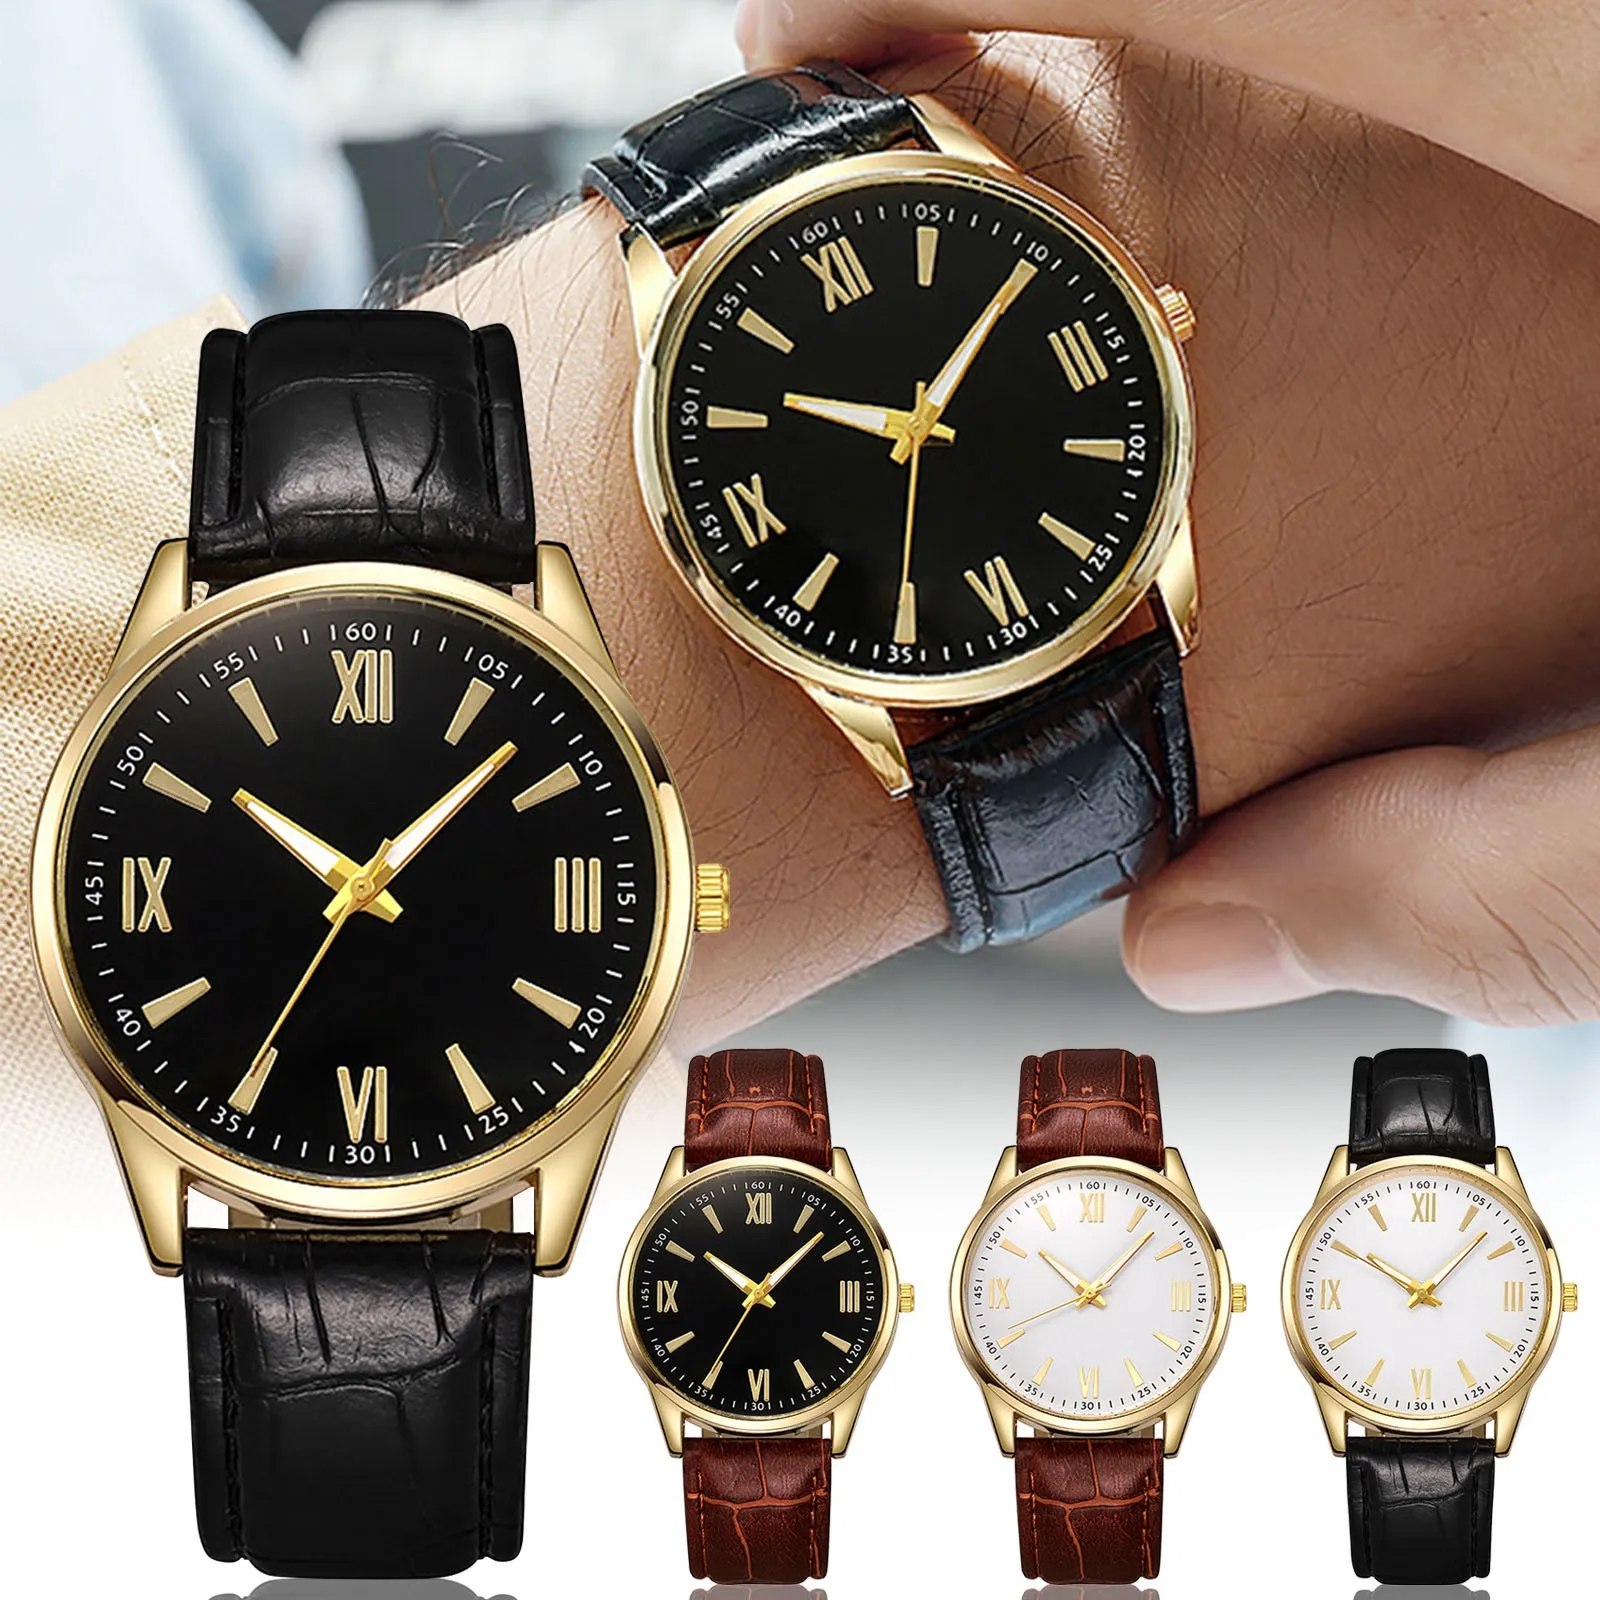 

Мужские часы, модные большие кварцевые наручные часы, часы на запястье для мужчин, точные кварцевые часы с оливками для мужчин, мужские часы